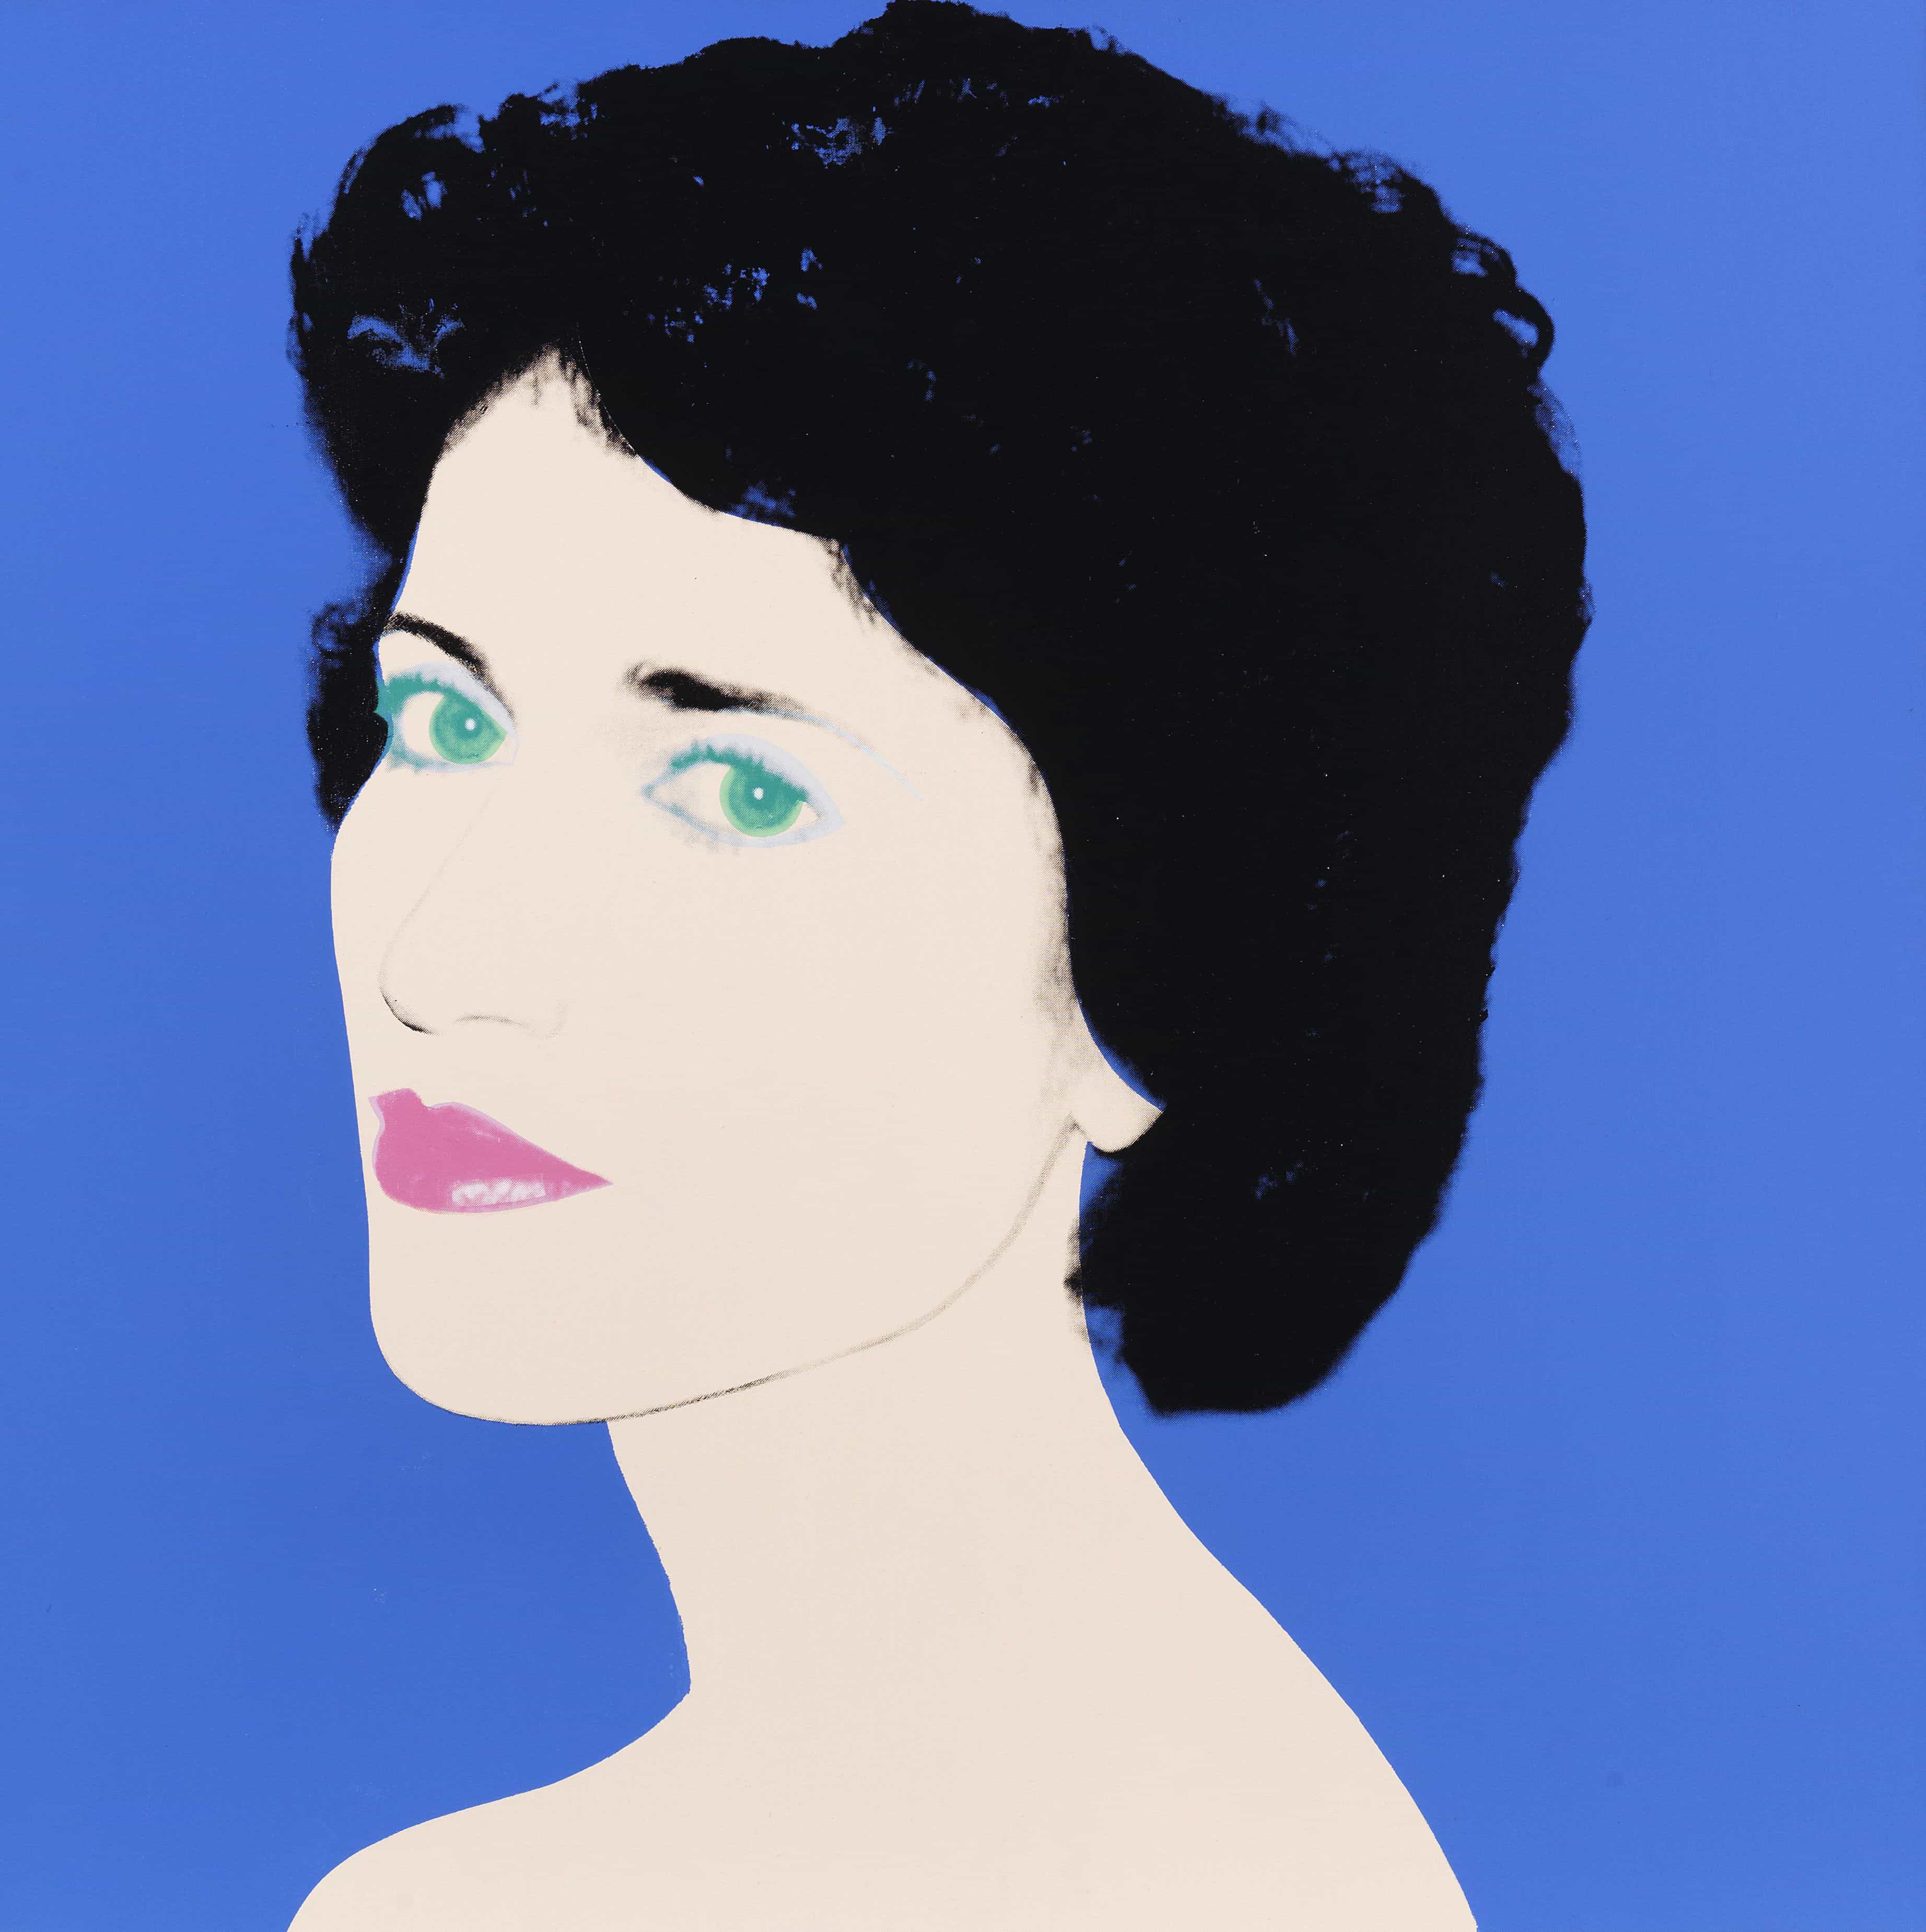 Andy Warhol, "Portrait of a Lady" (Enid Beal), 1985. Schätzung: € 400.000 Ergebnis: € 1.125.000